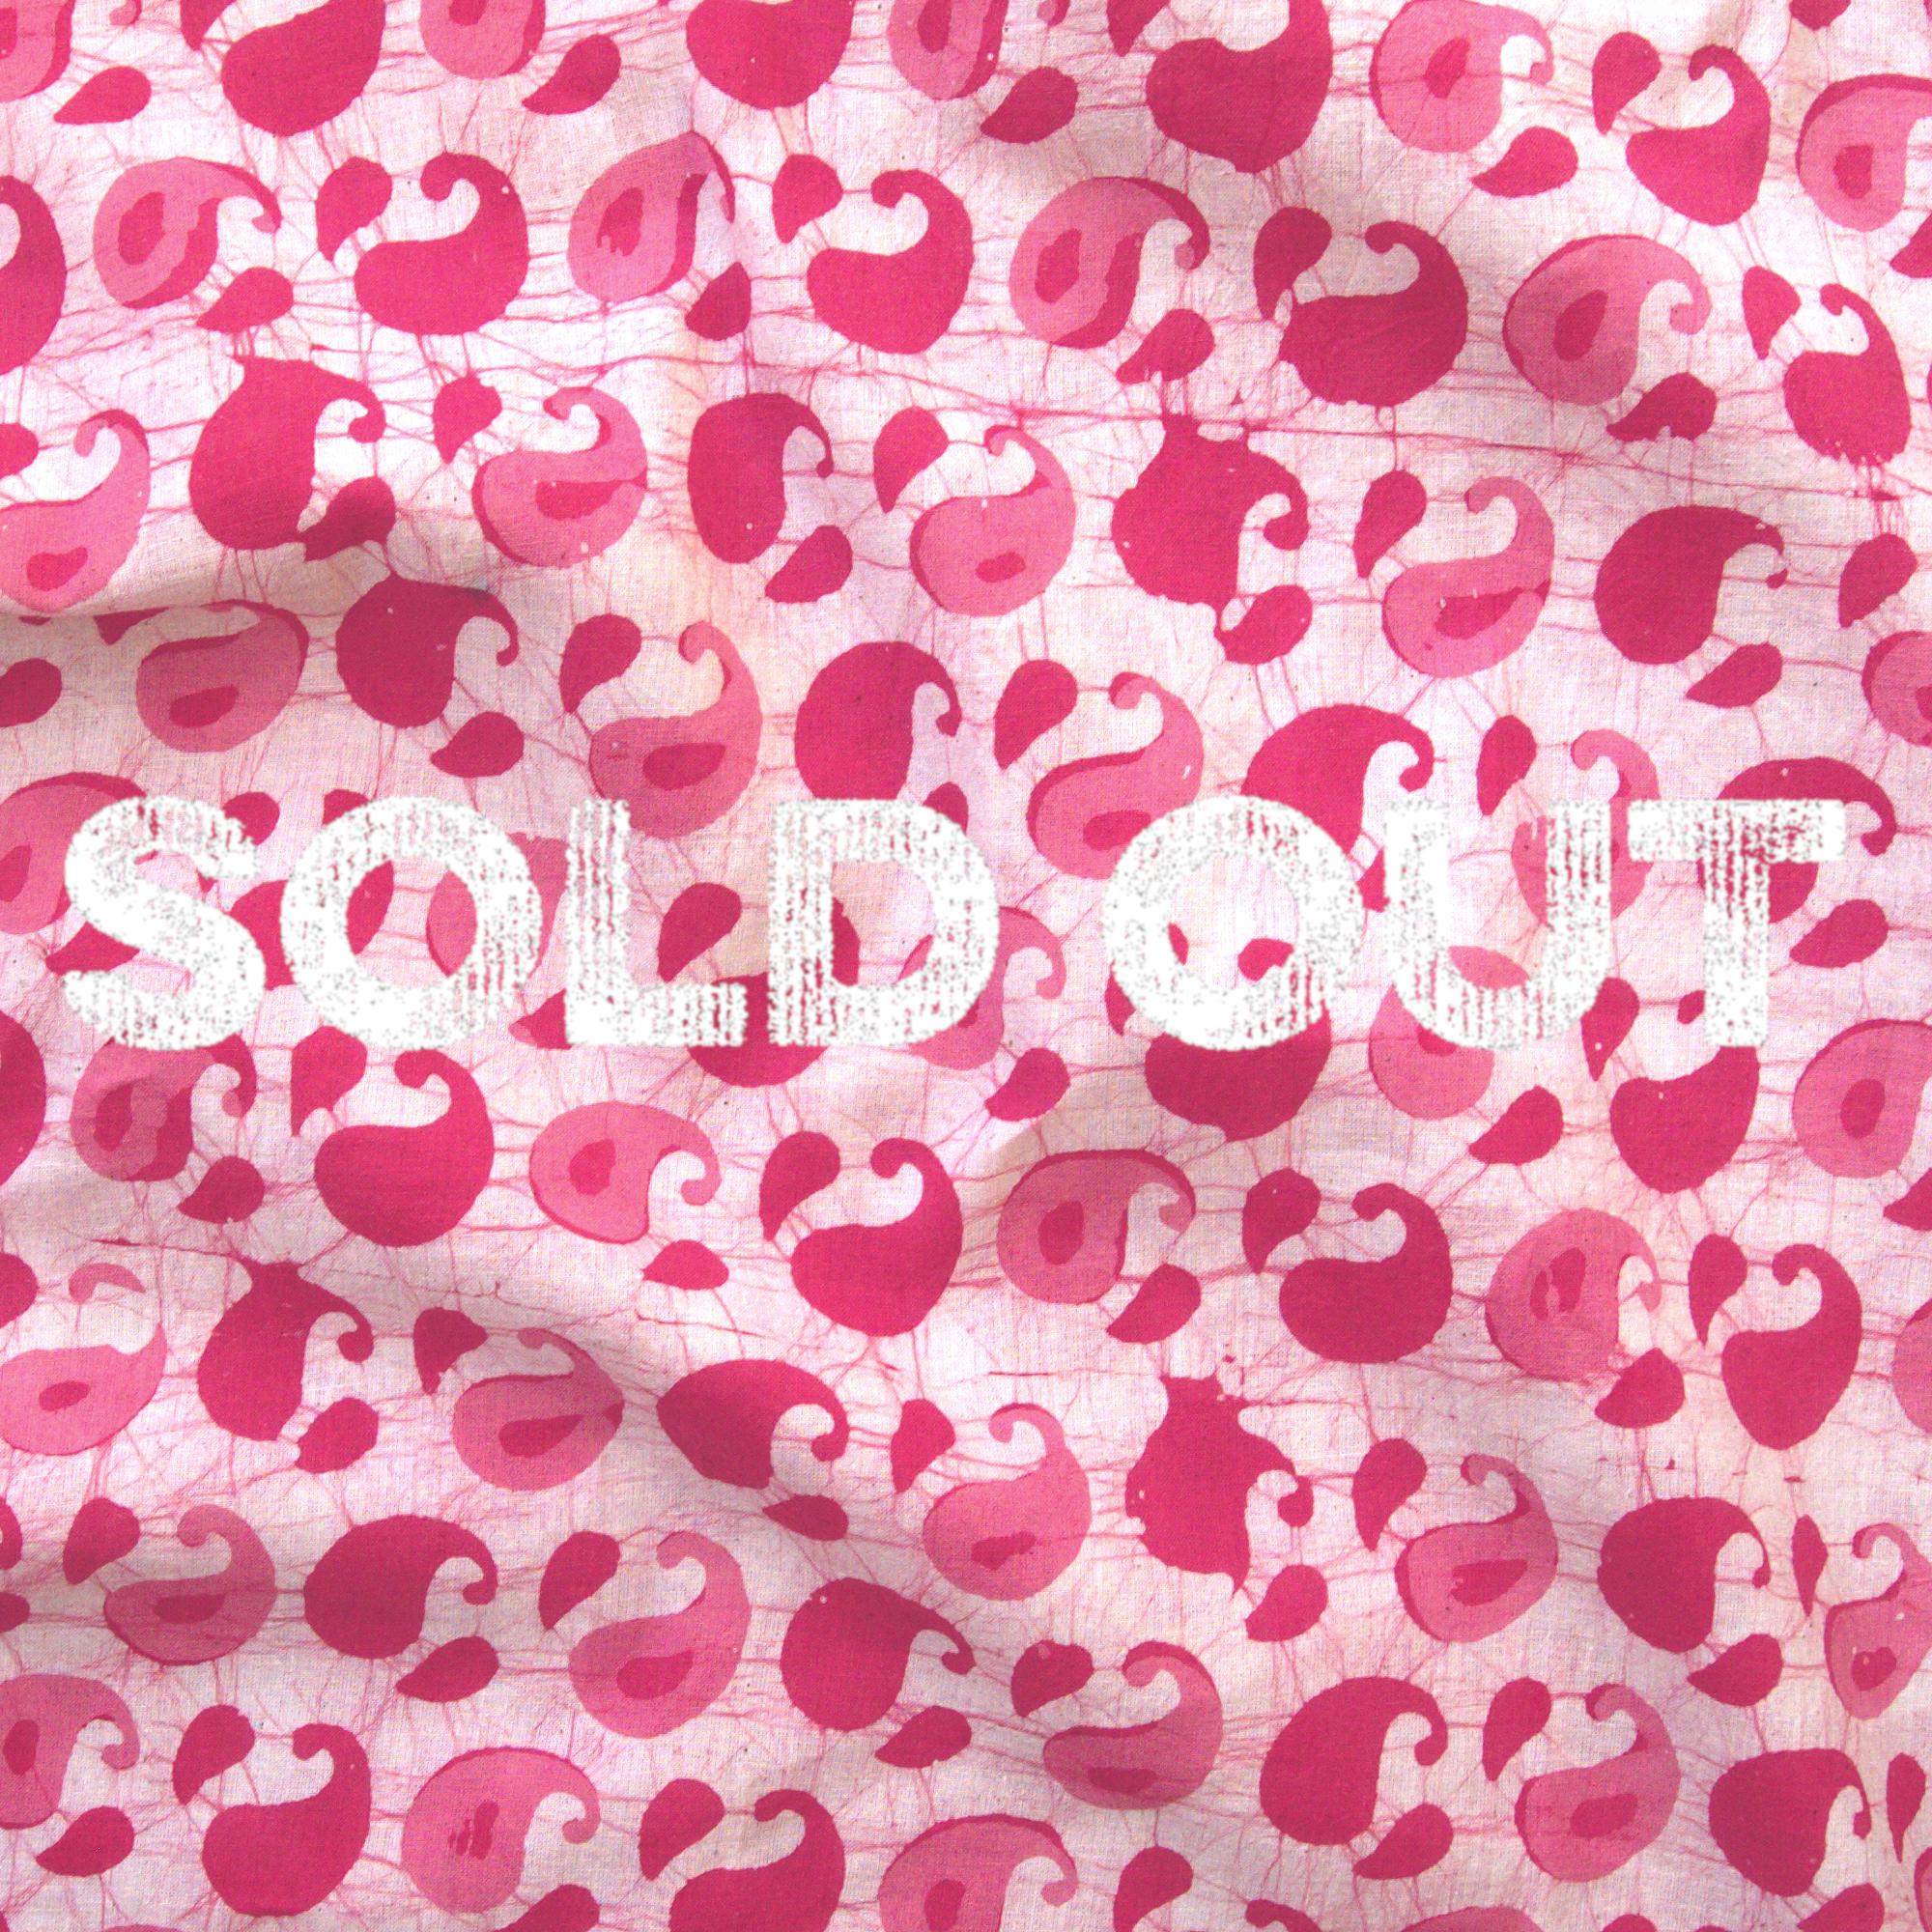 1 - SHA07 - 100% Block-Printed Batik Cotton Fabric From India - Batik - Pink Red Couple Paisley - Contrast